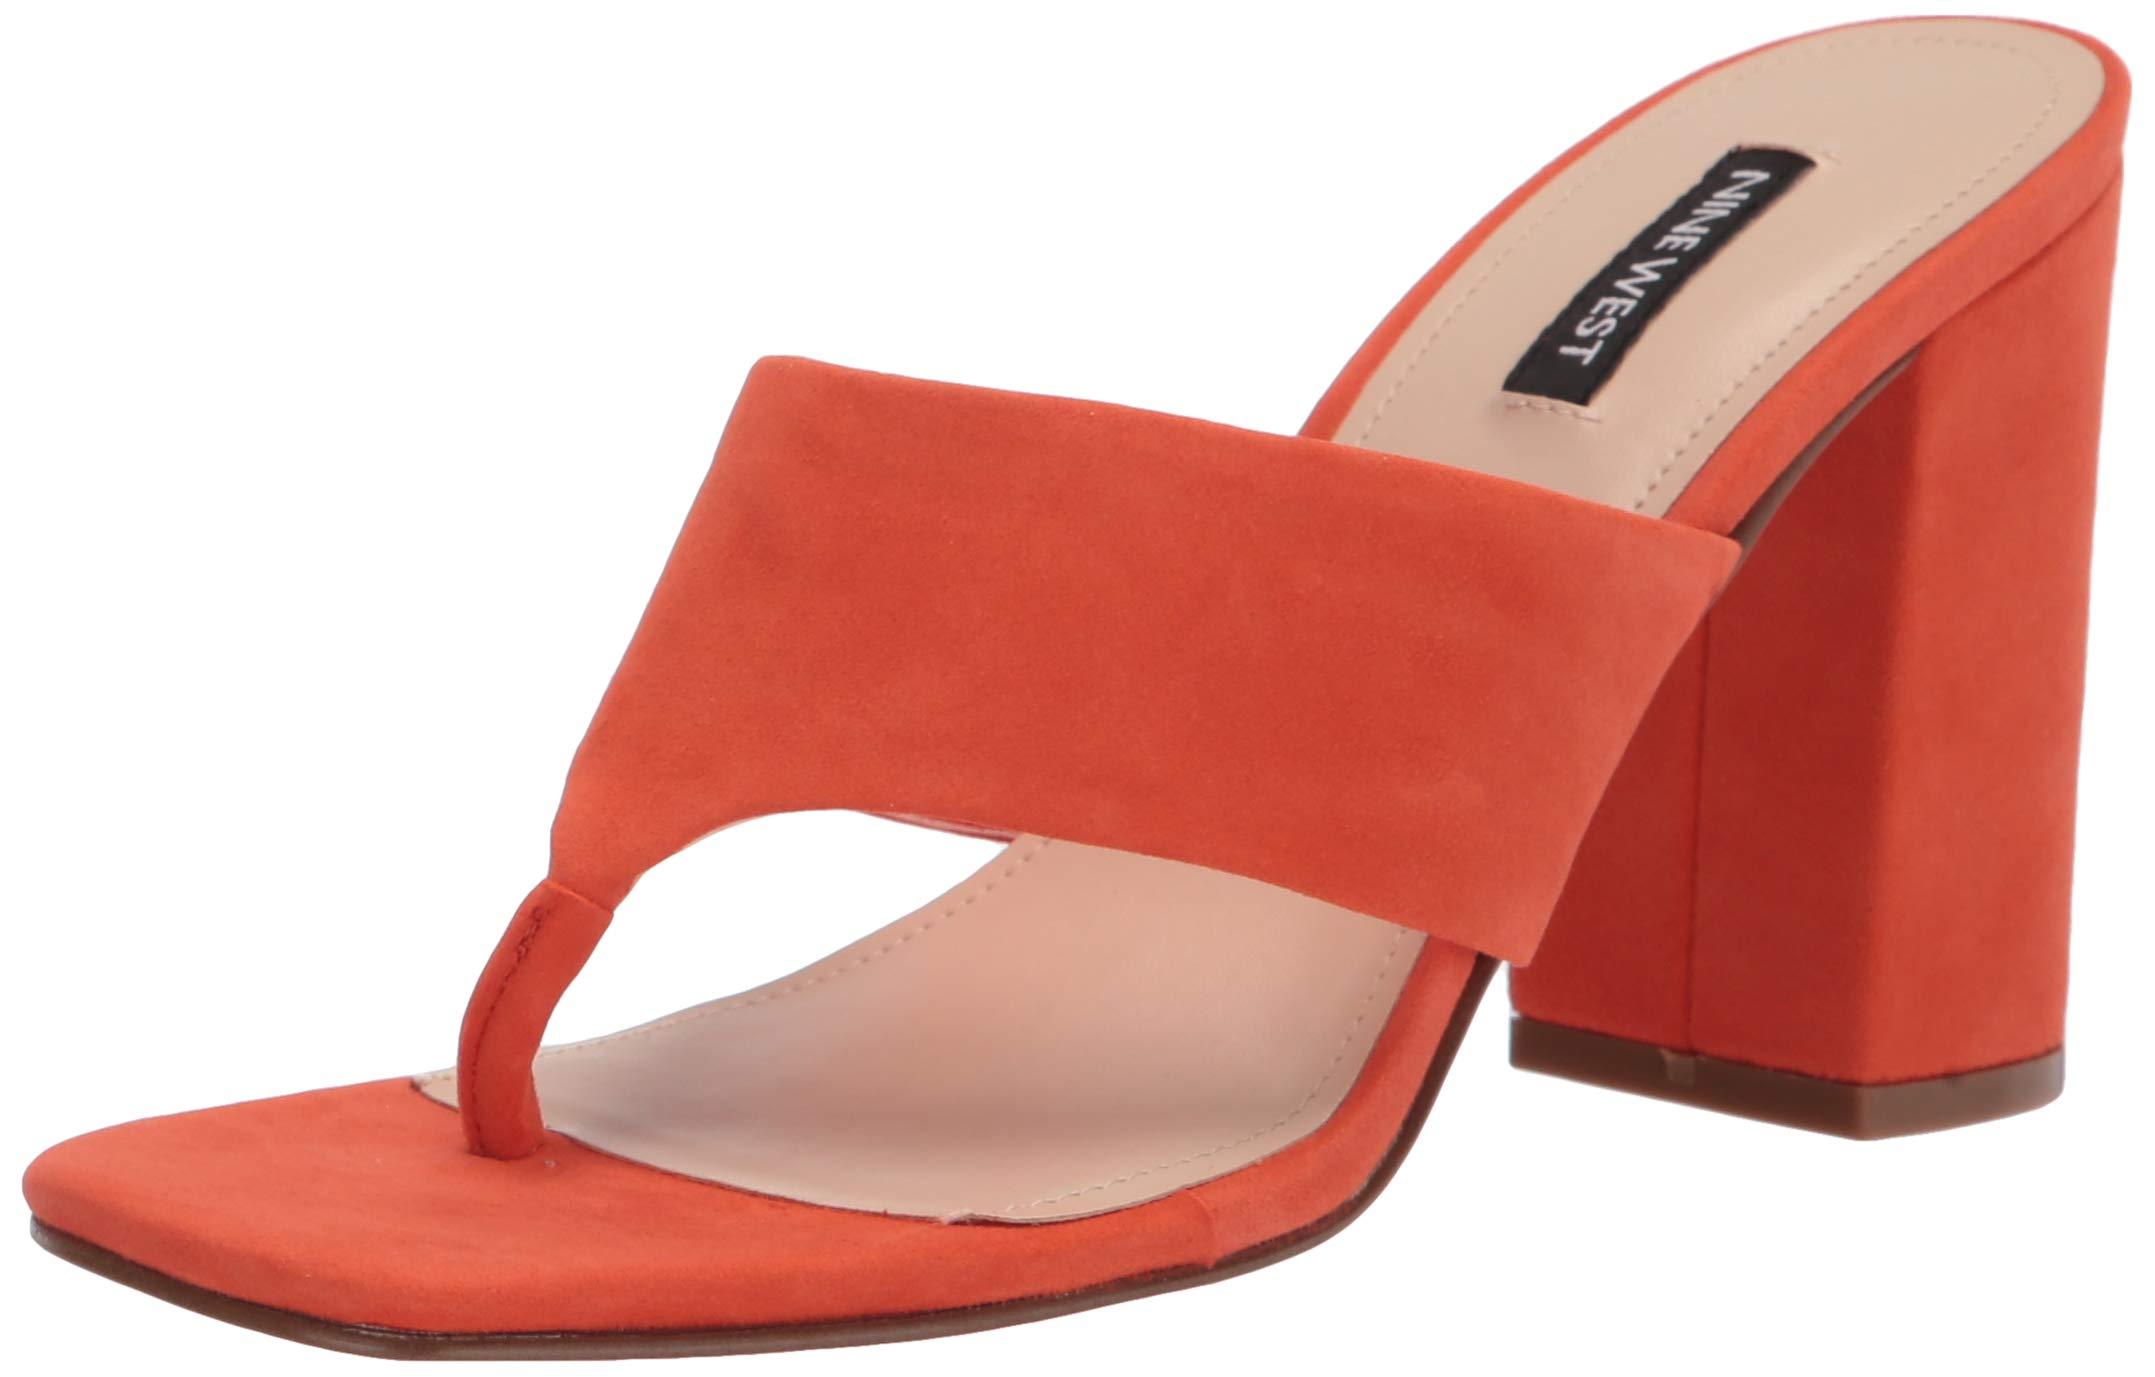 Nine West Gogo Heeled Sandal in Orange Suede (Orange) - Save 40% - Lyst